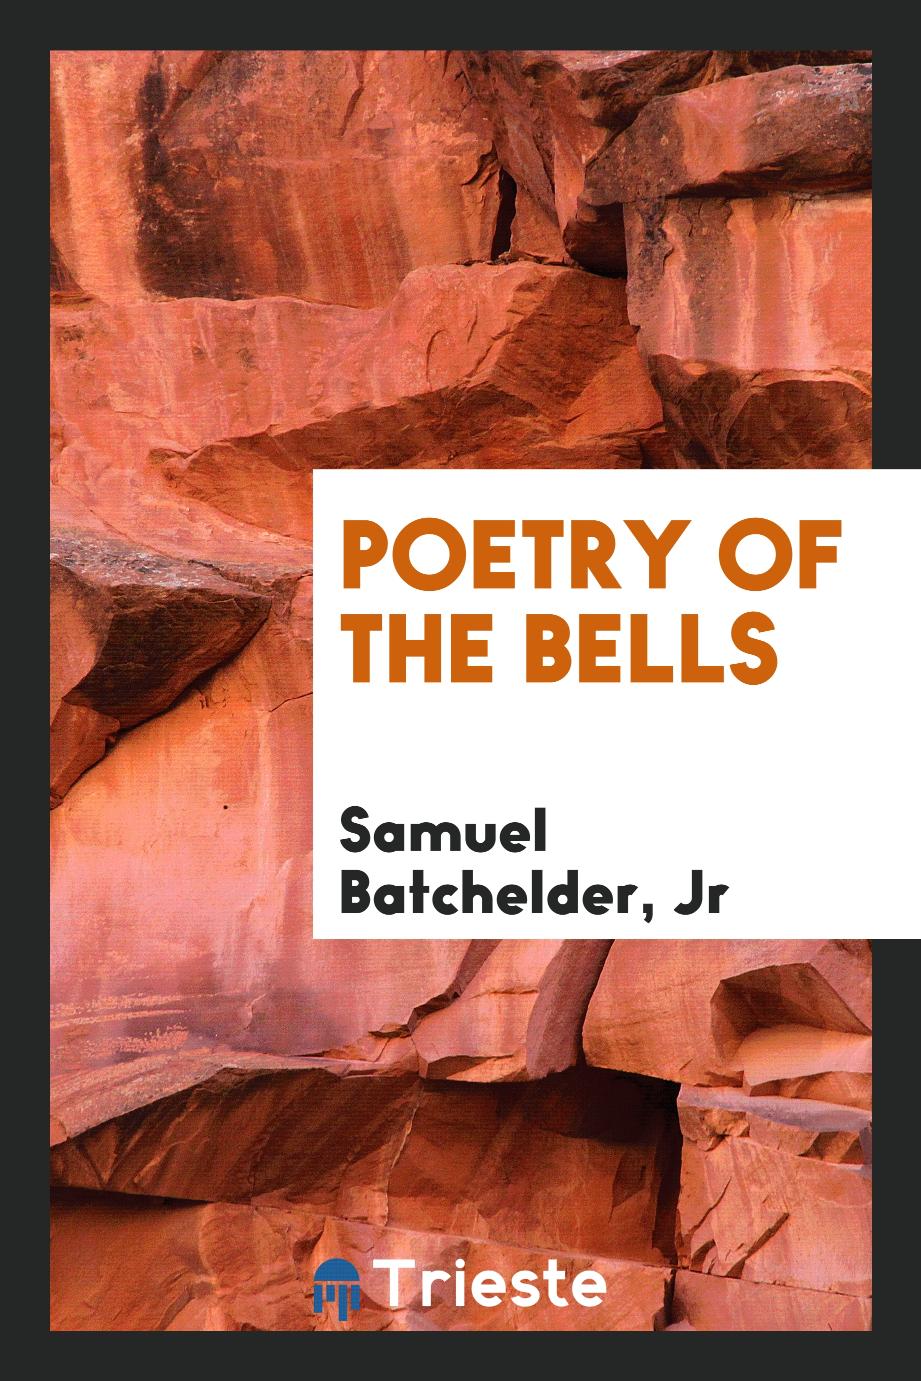 Poetry of the bells